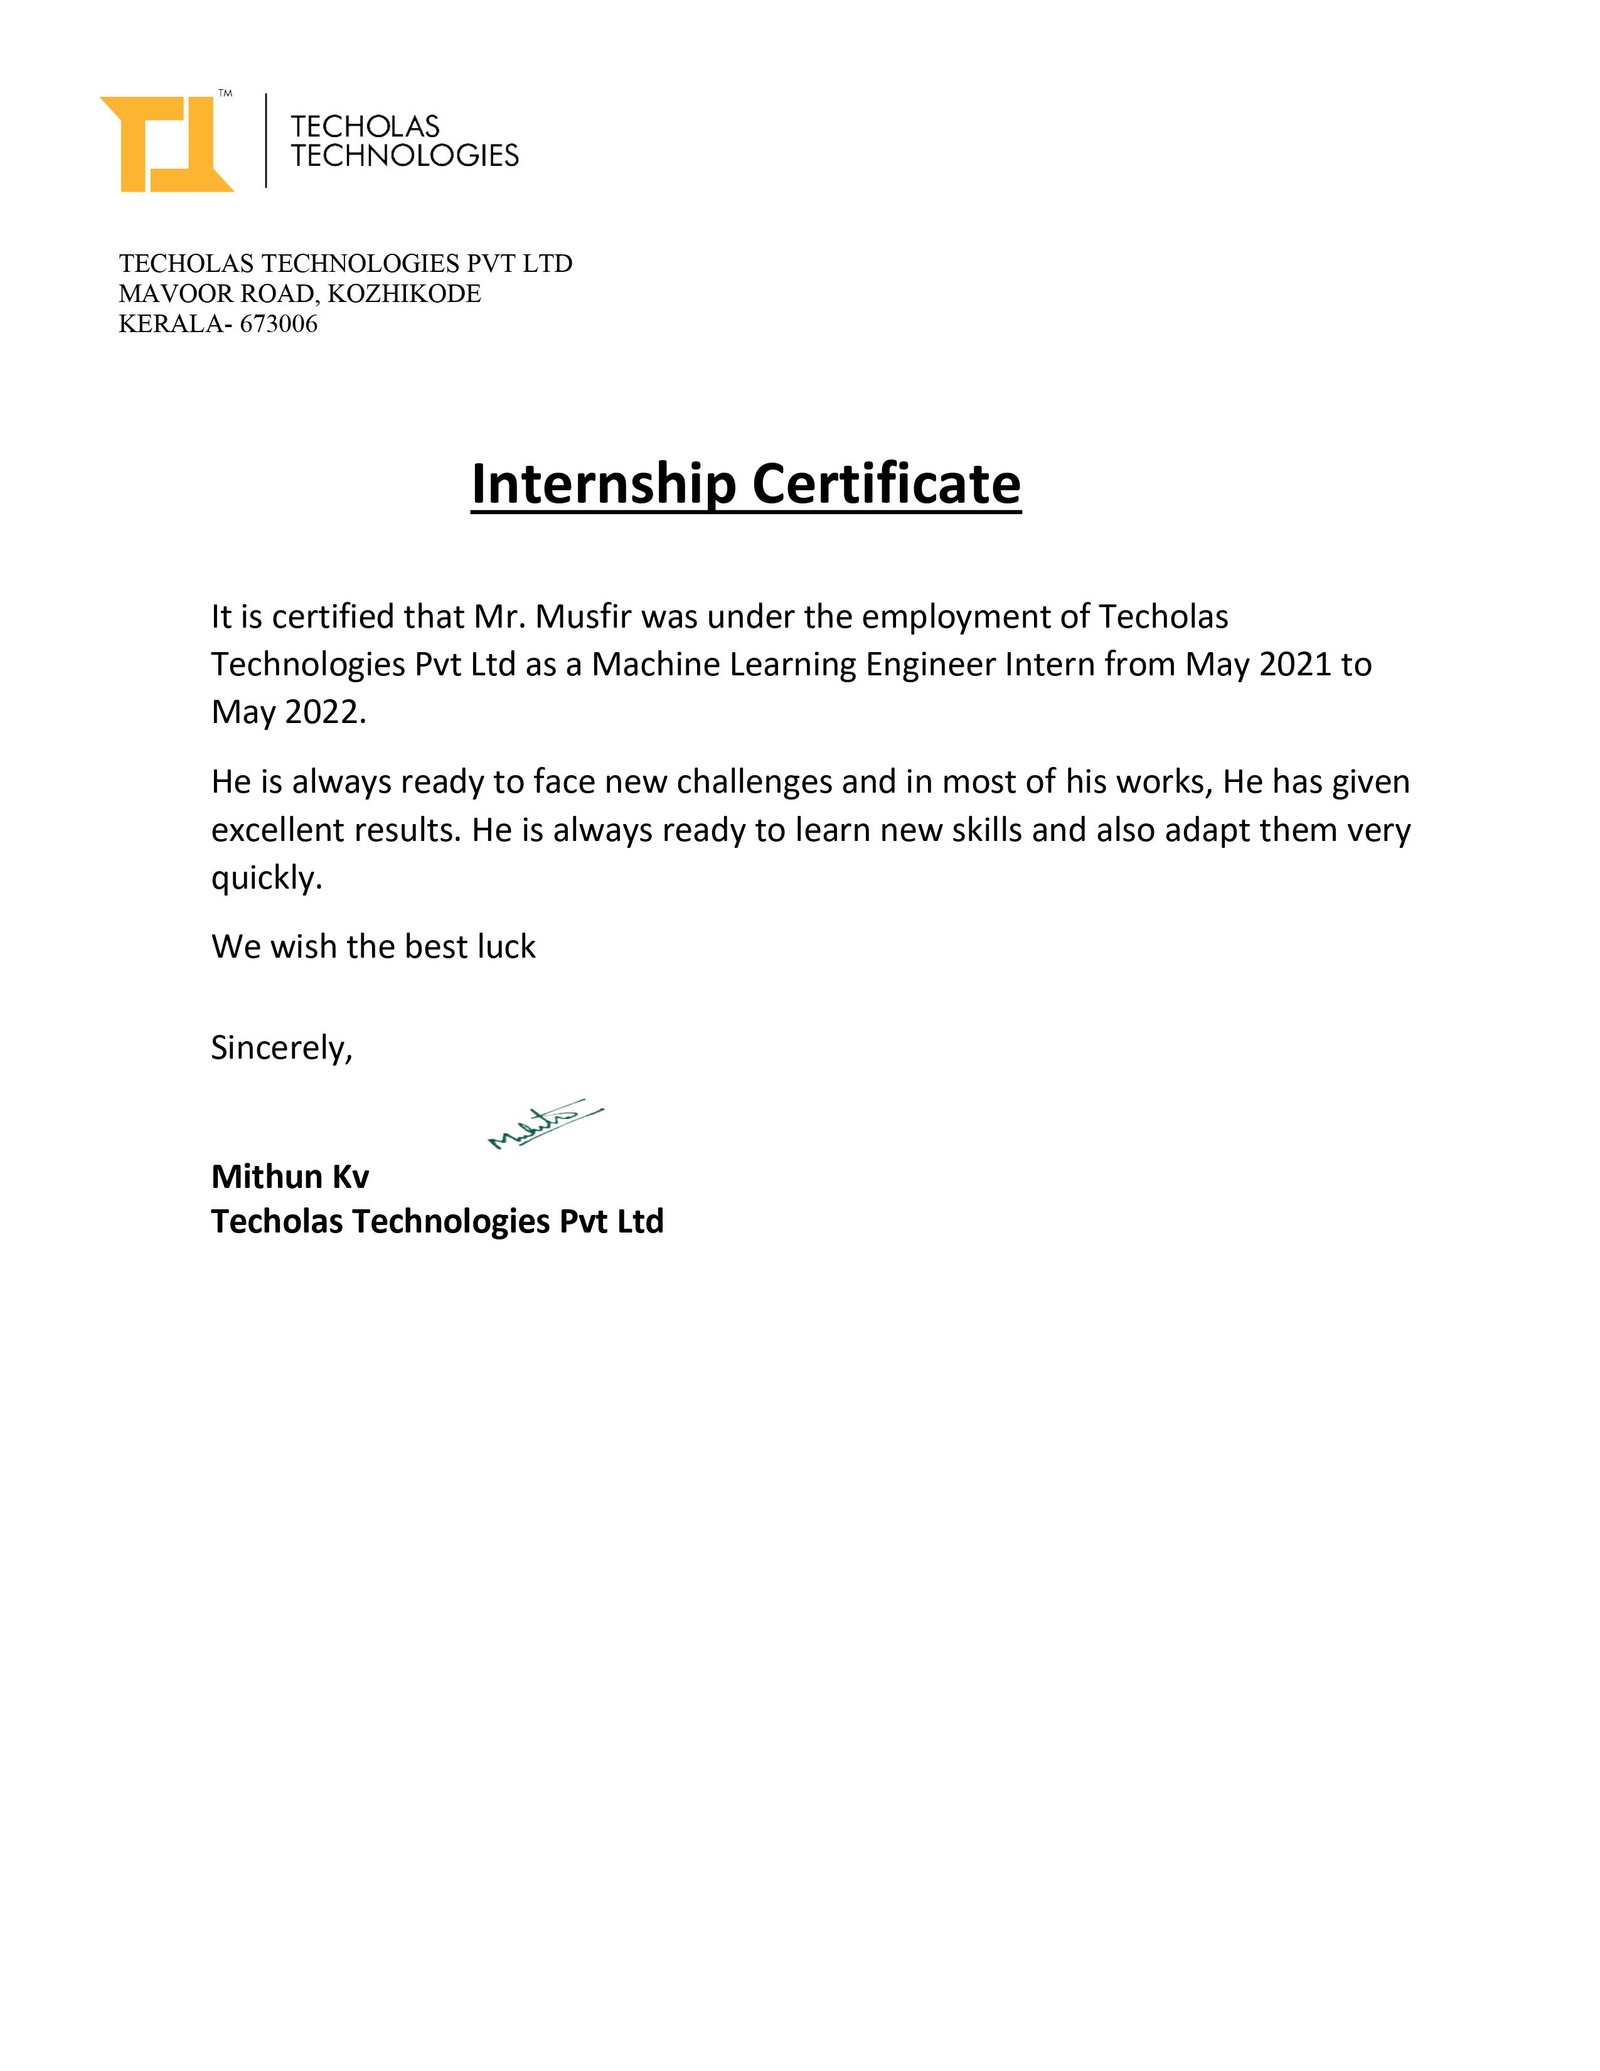 Full Stack Development Internship Certificate